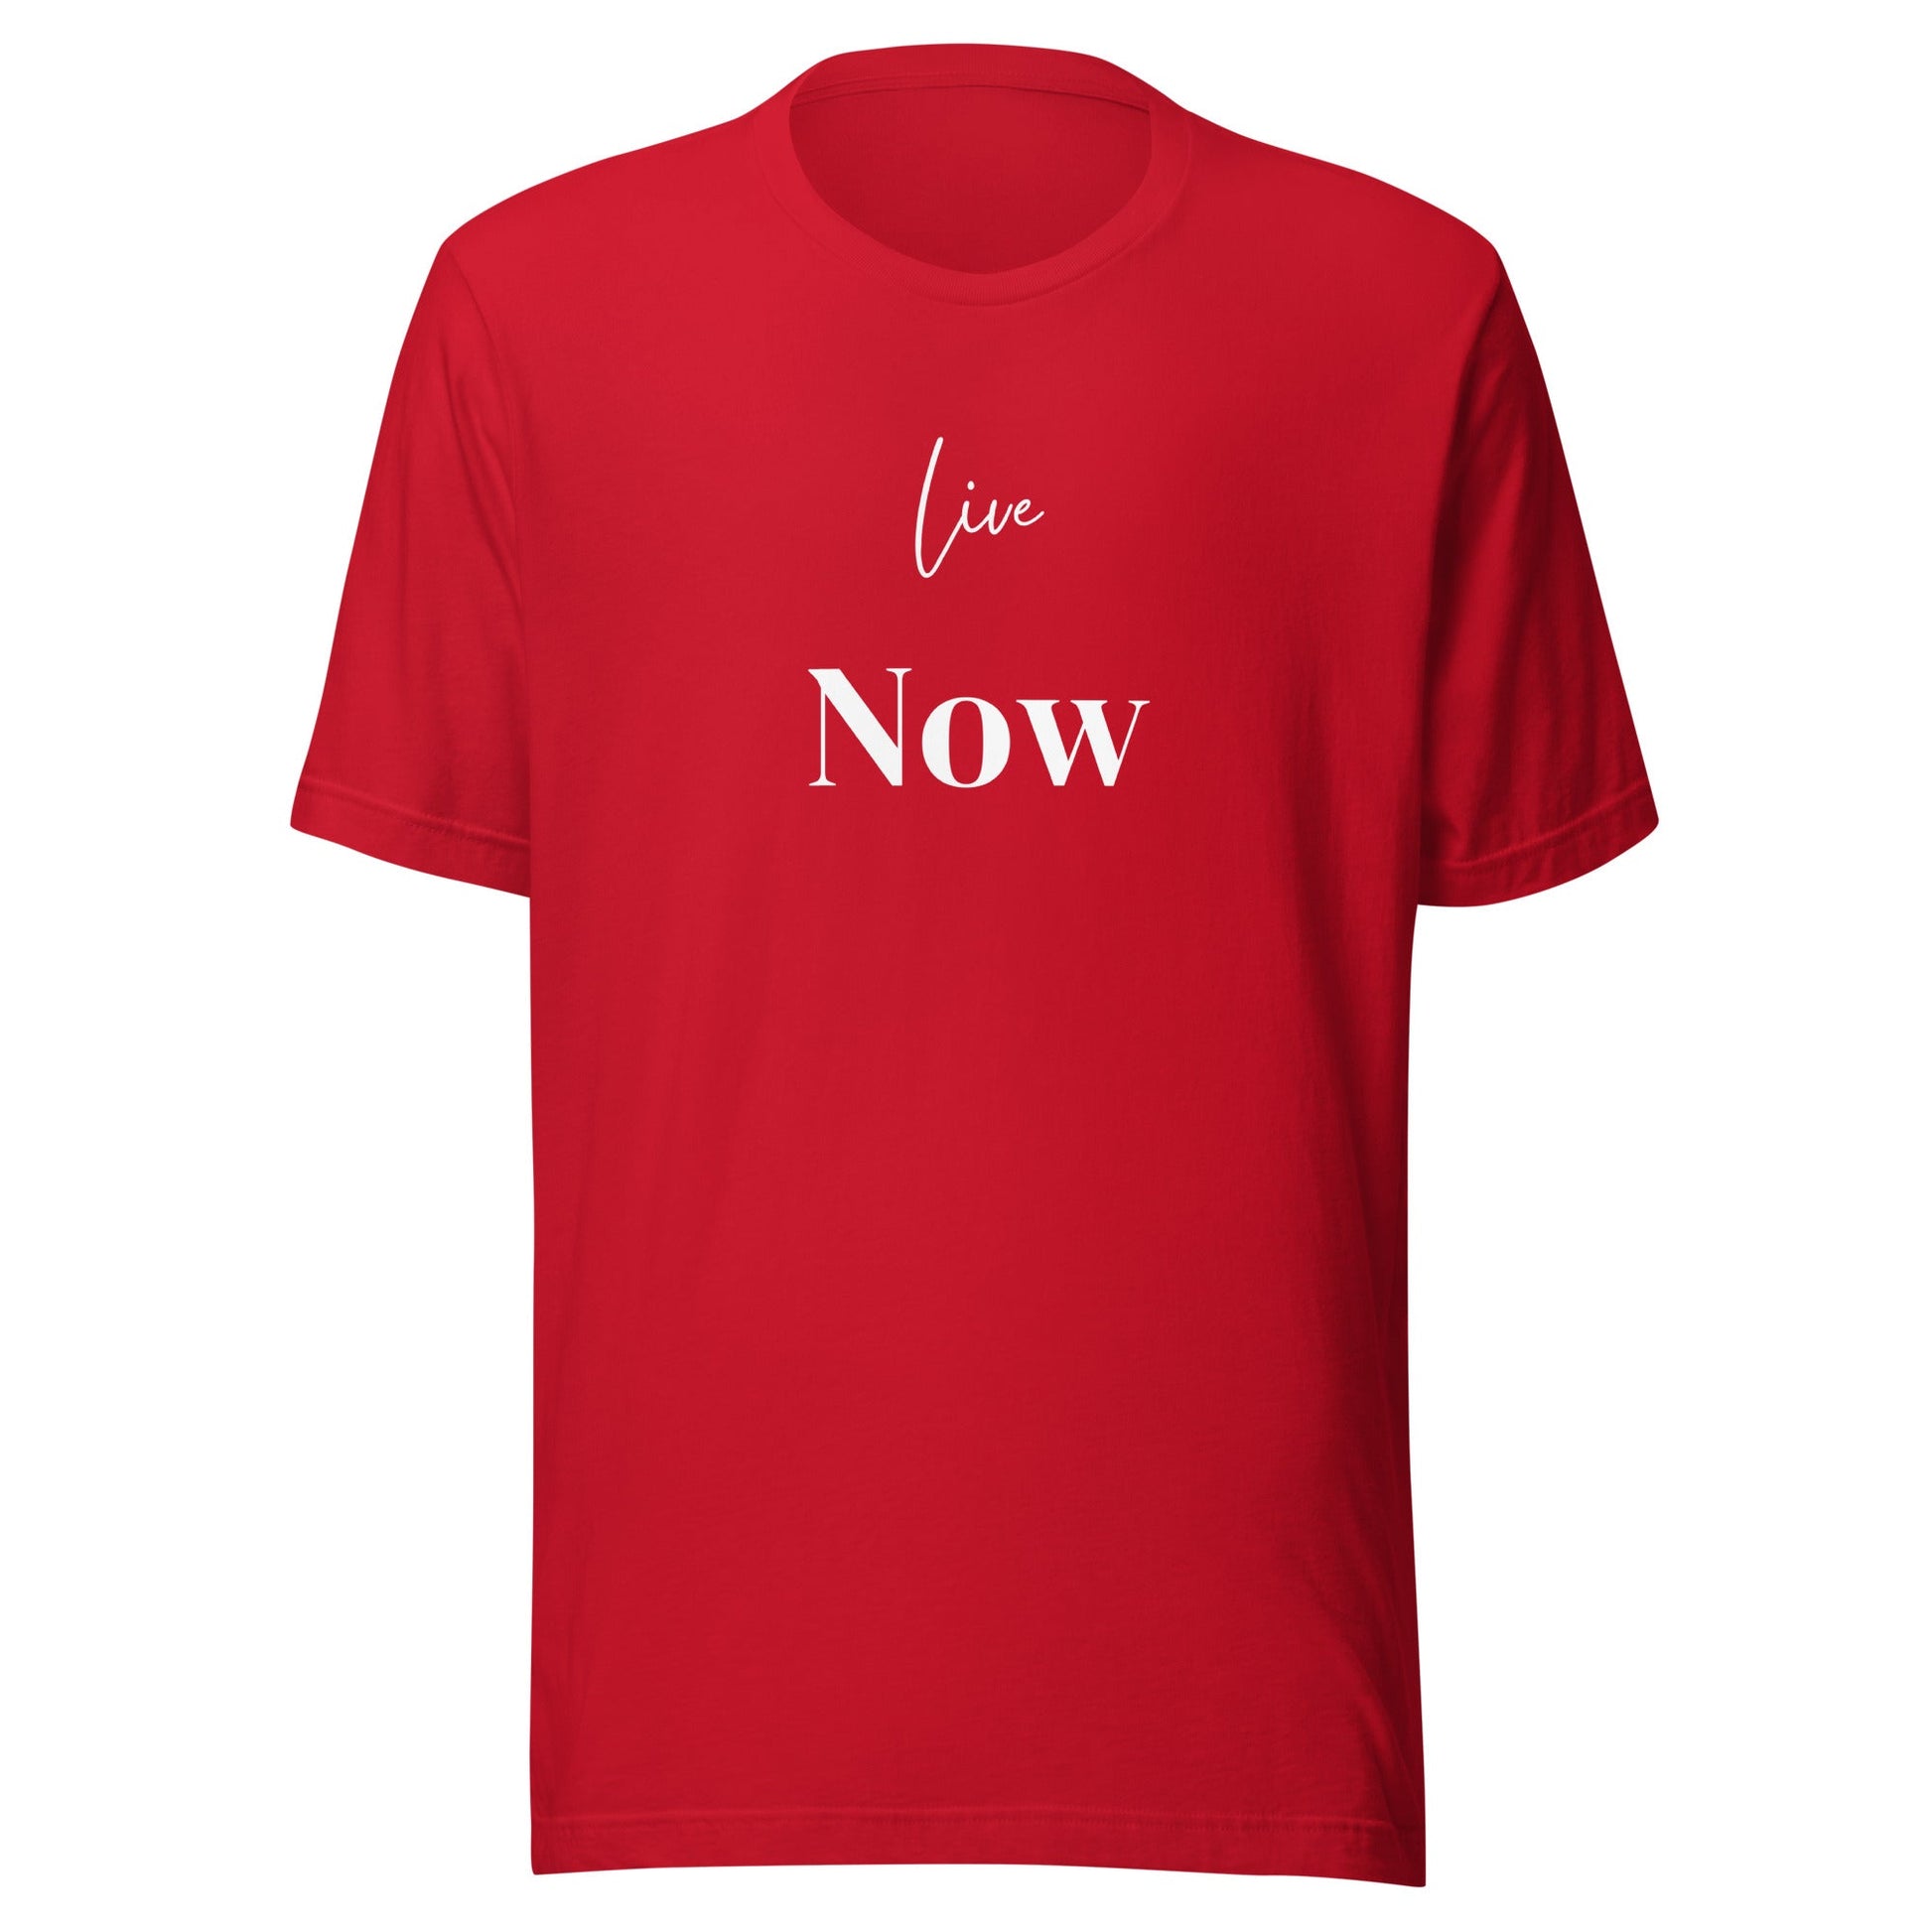 Live Now - Unisex t-shirt - lilaloop - T-shirt